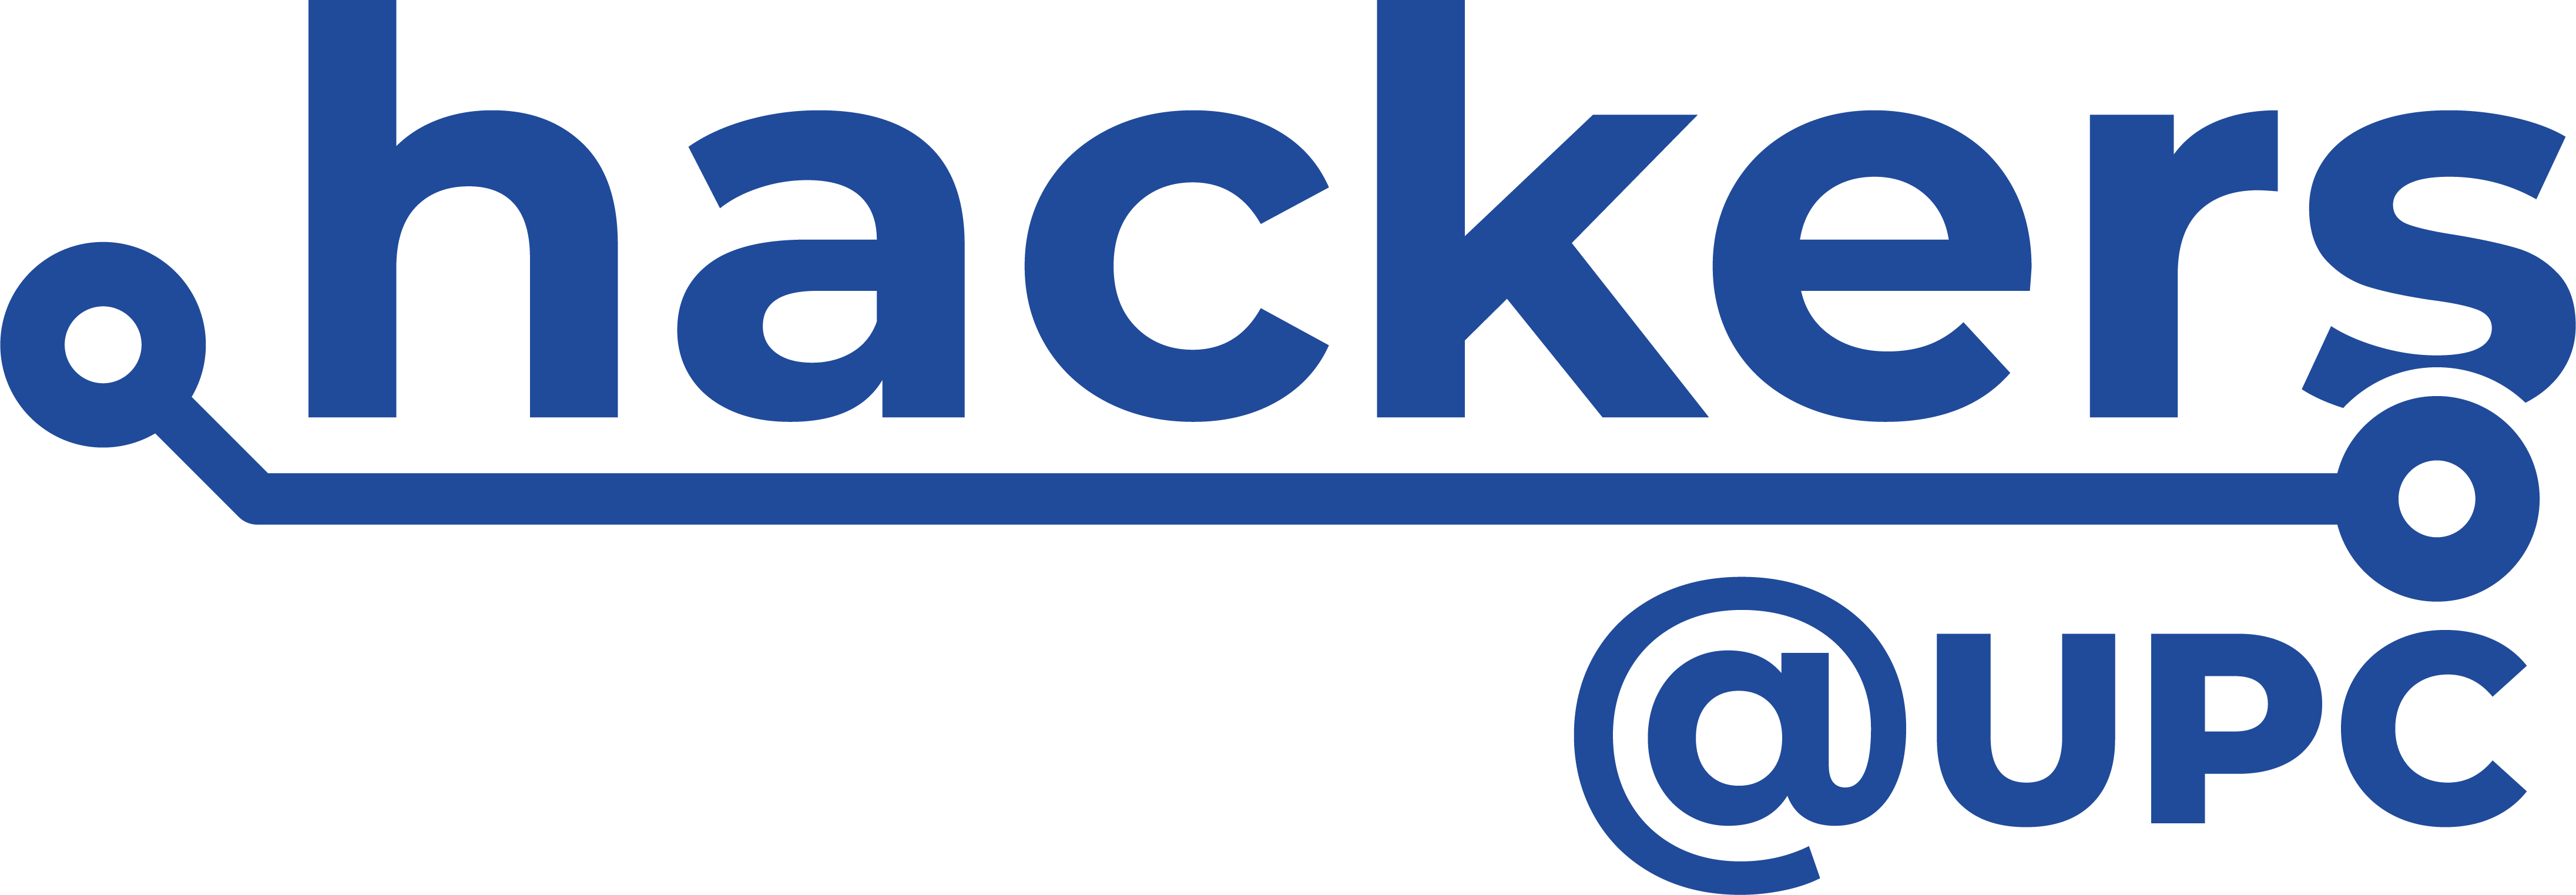 logo-hackers